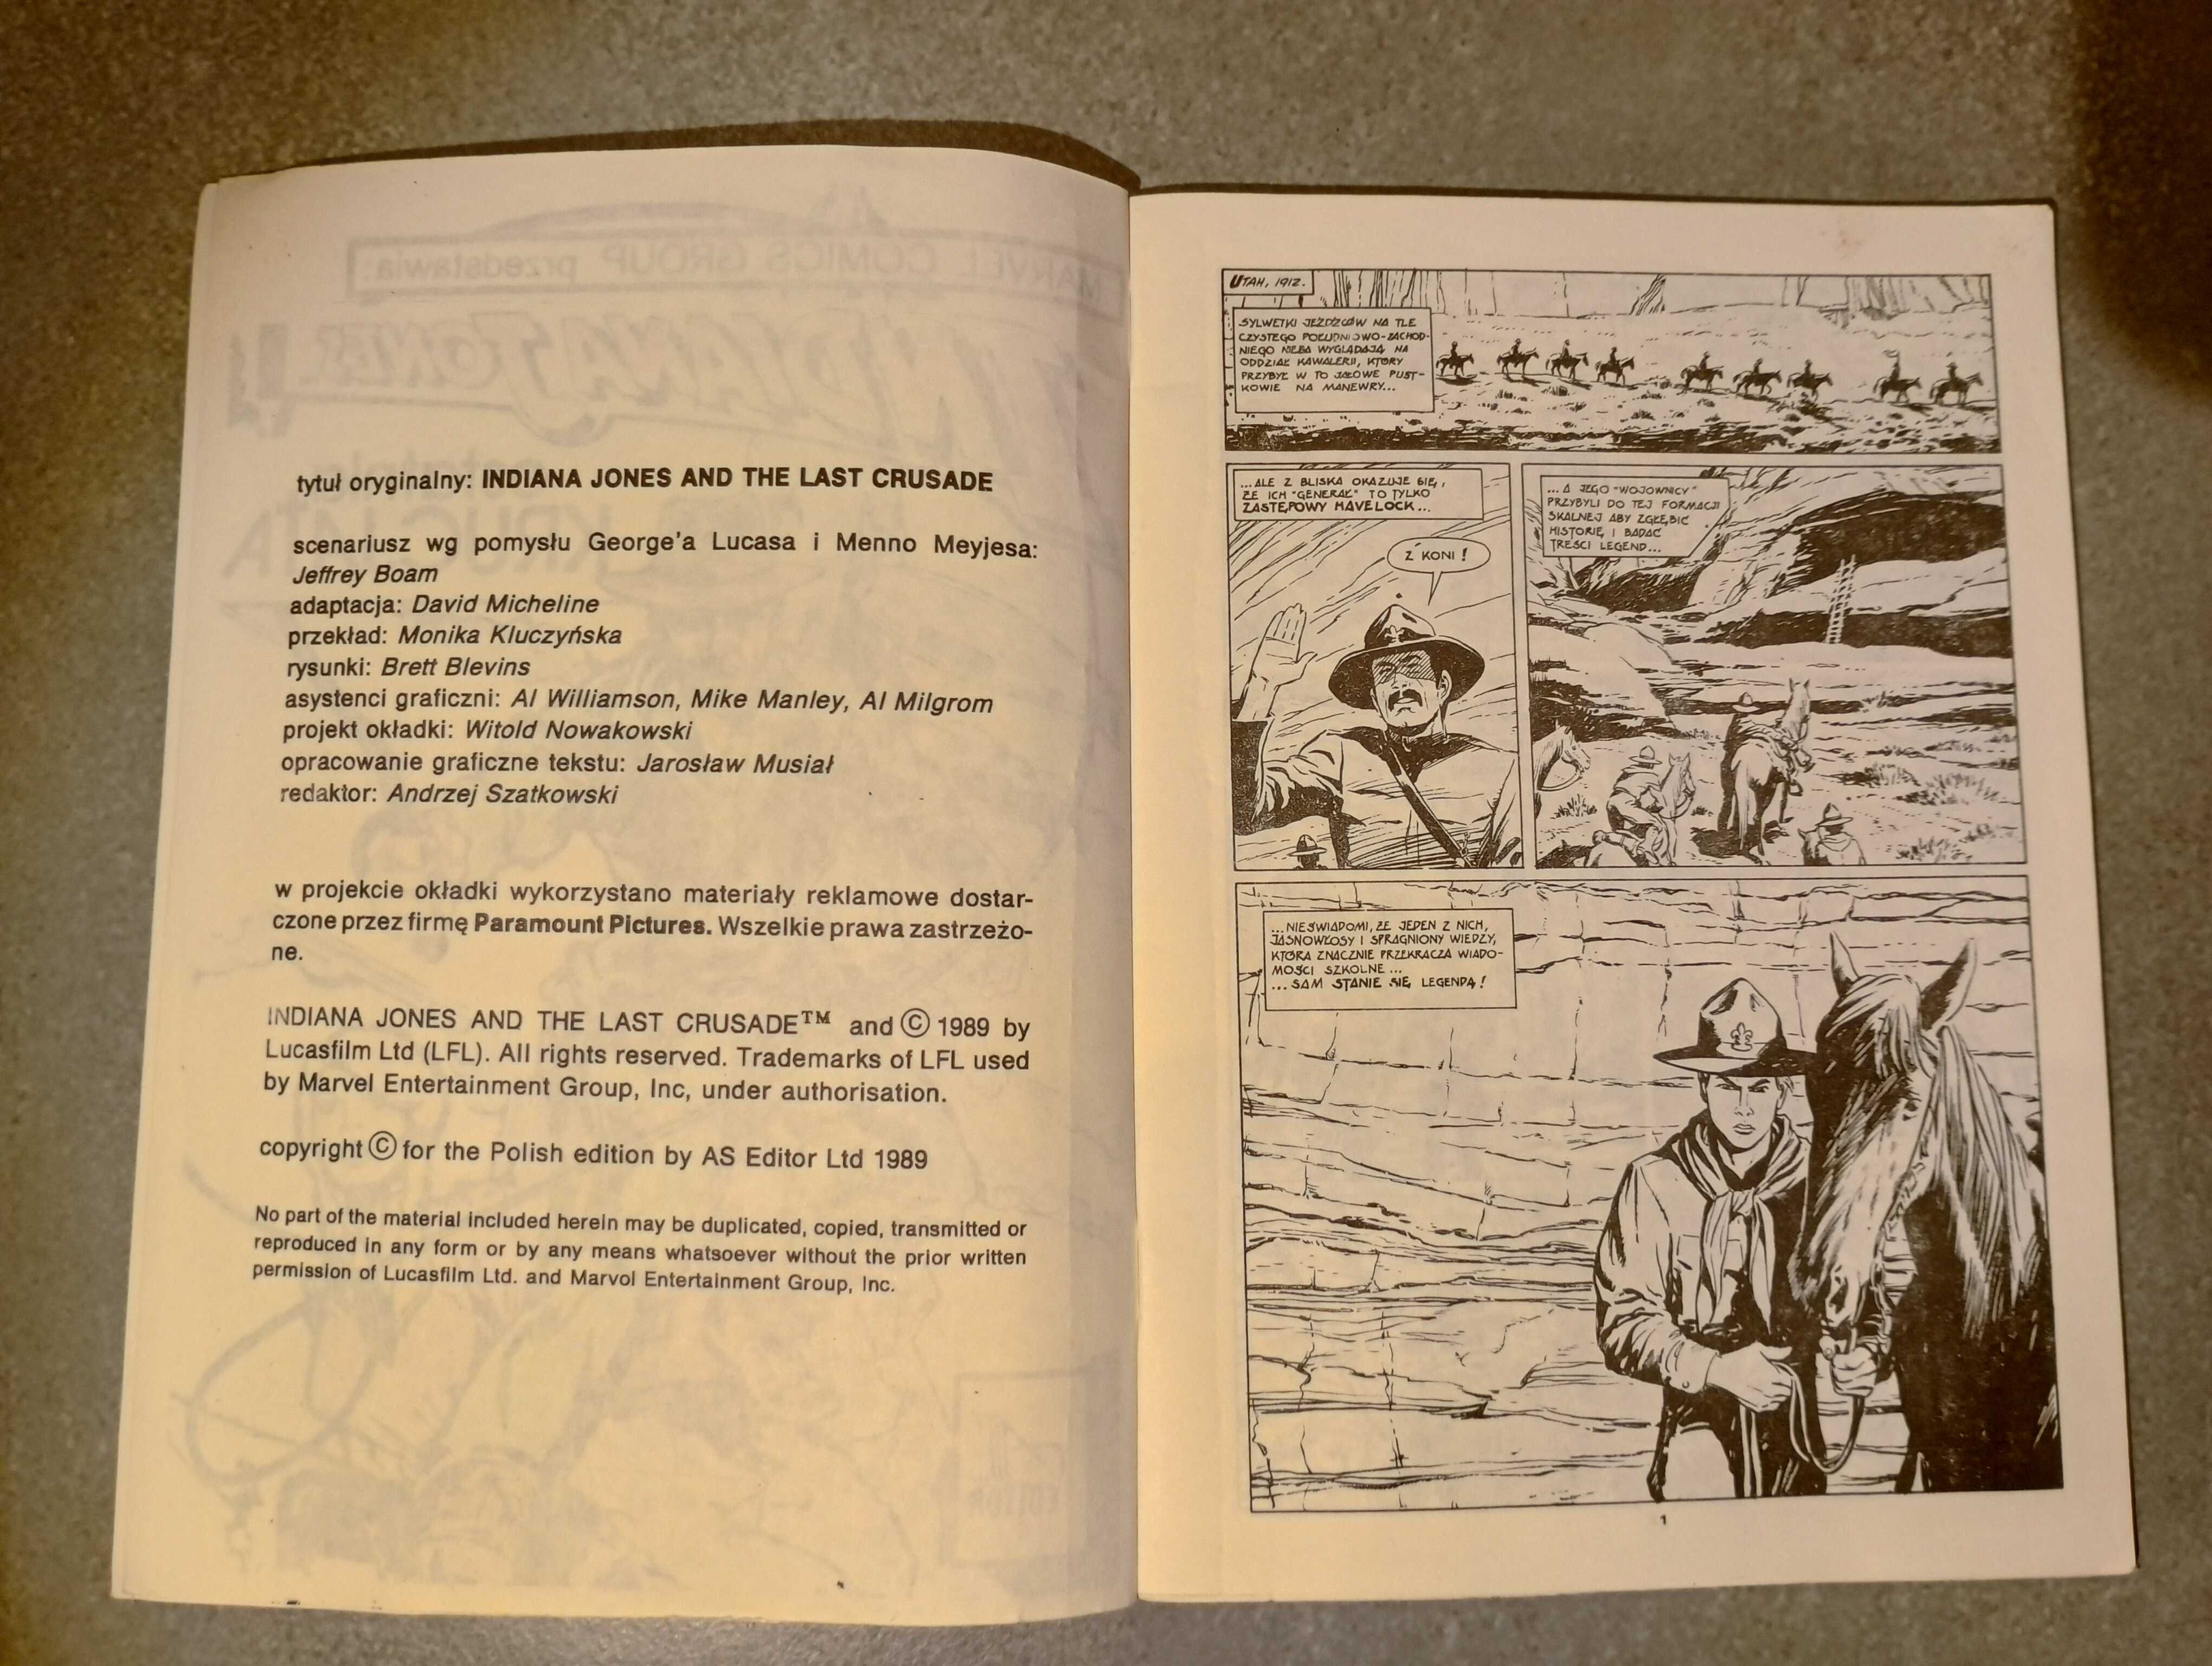 KOMIKS INDIANA JONES Ostatnia Krucjata Wyd.1 1989 PRL Marvel AS EDITOR